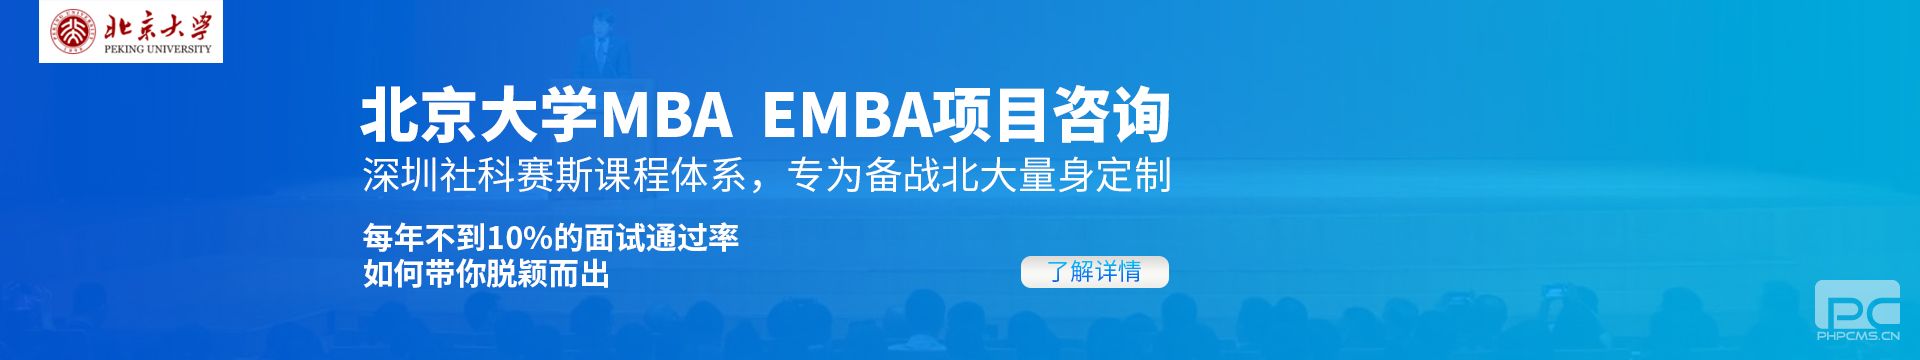 北大MBA EMBA